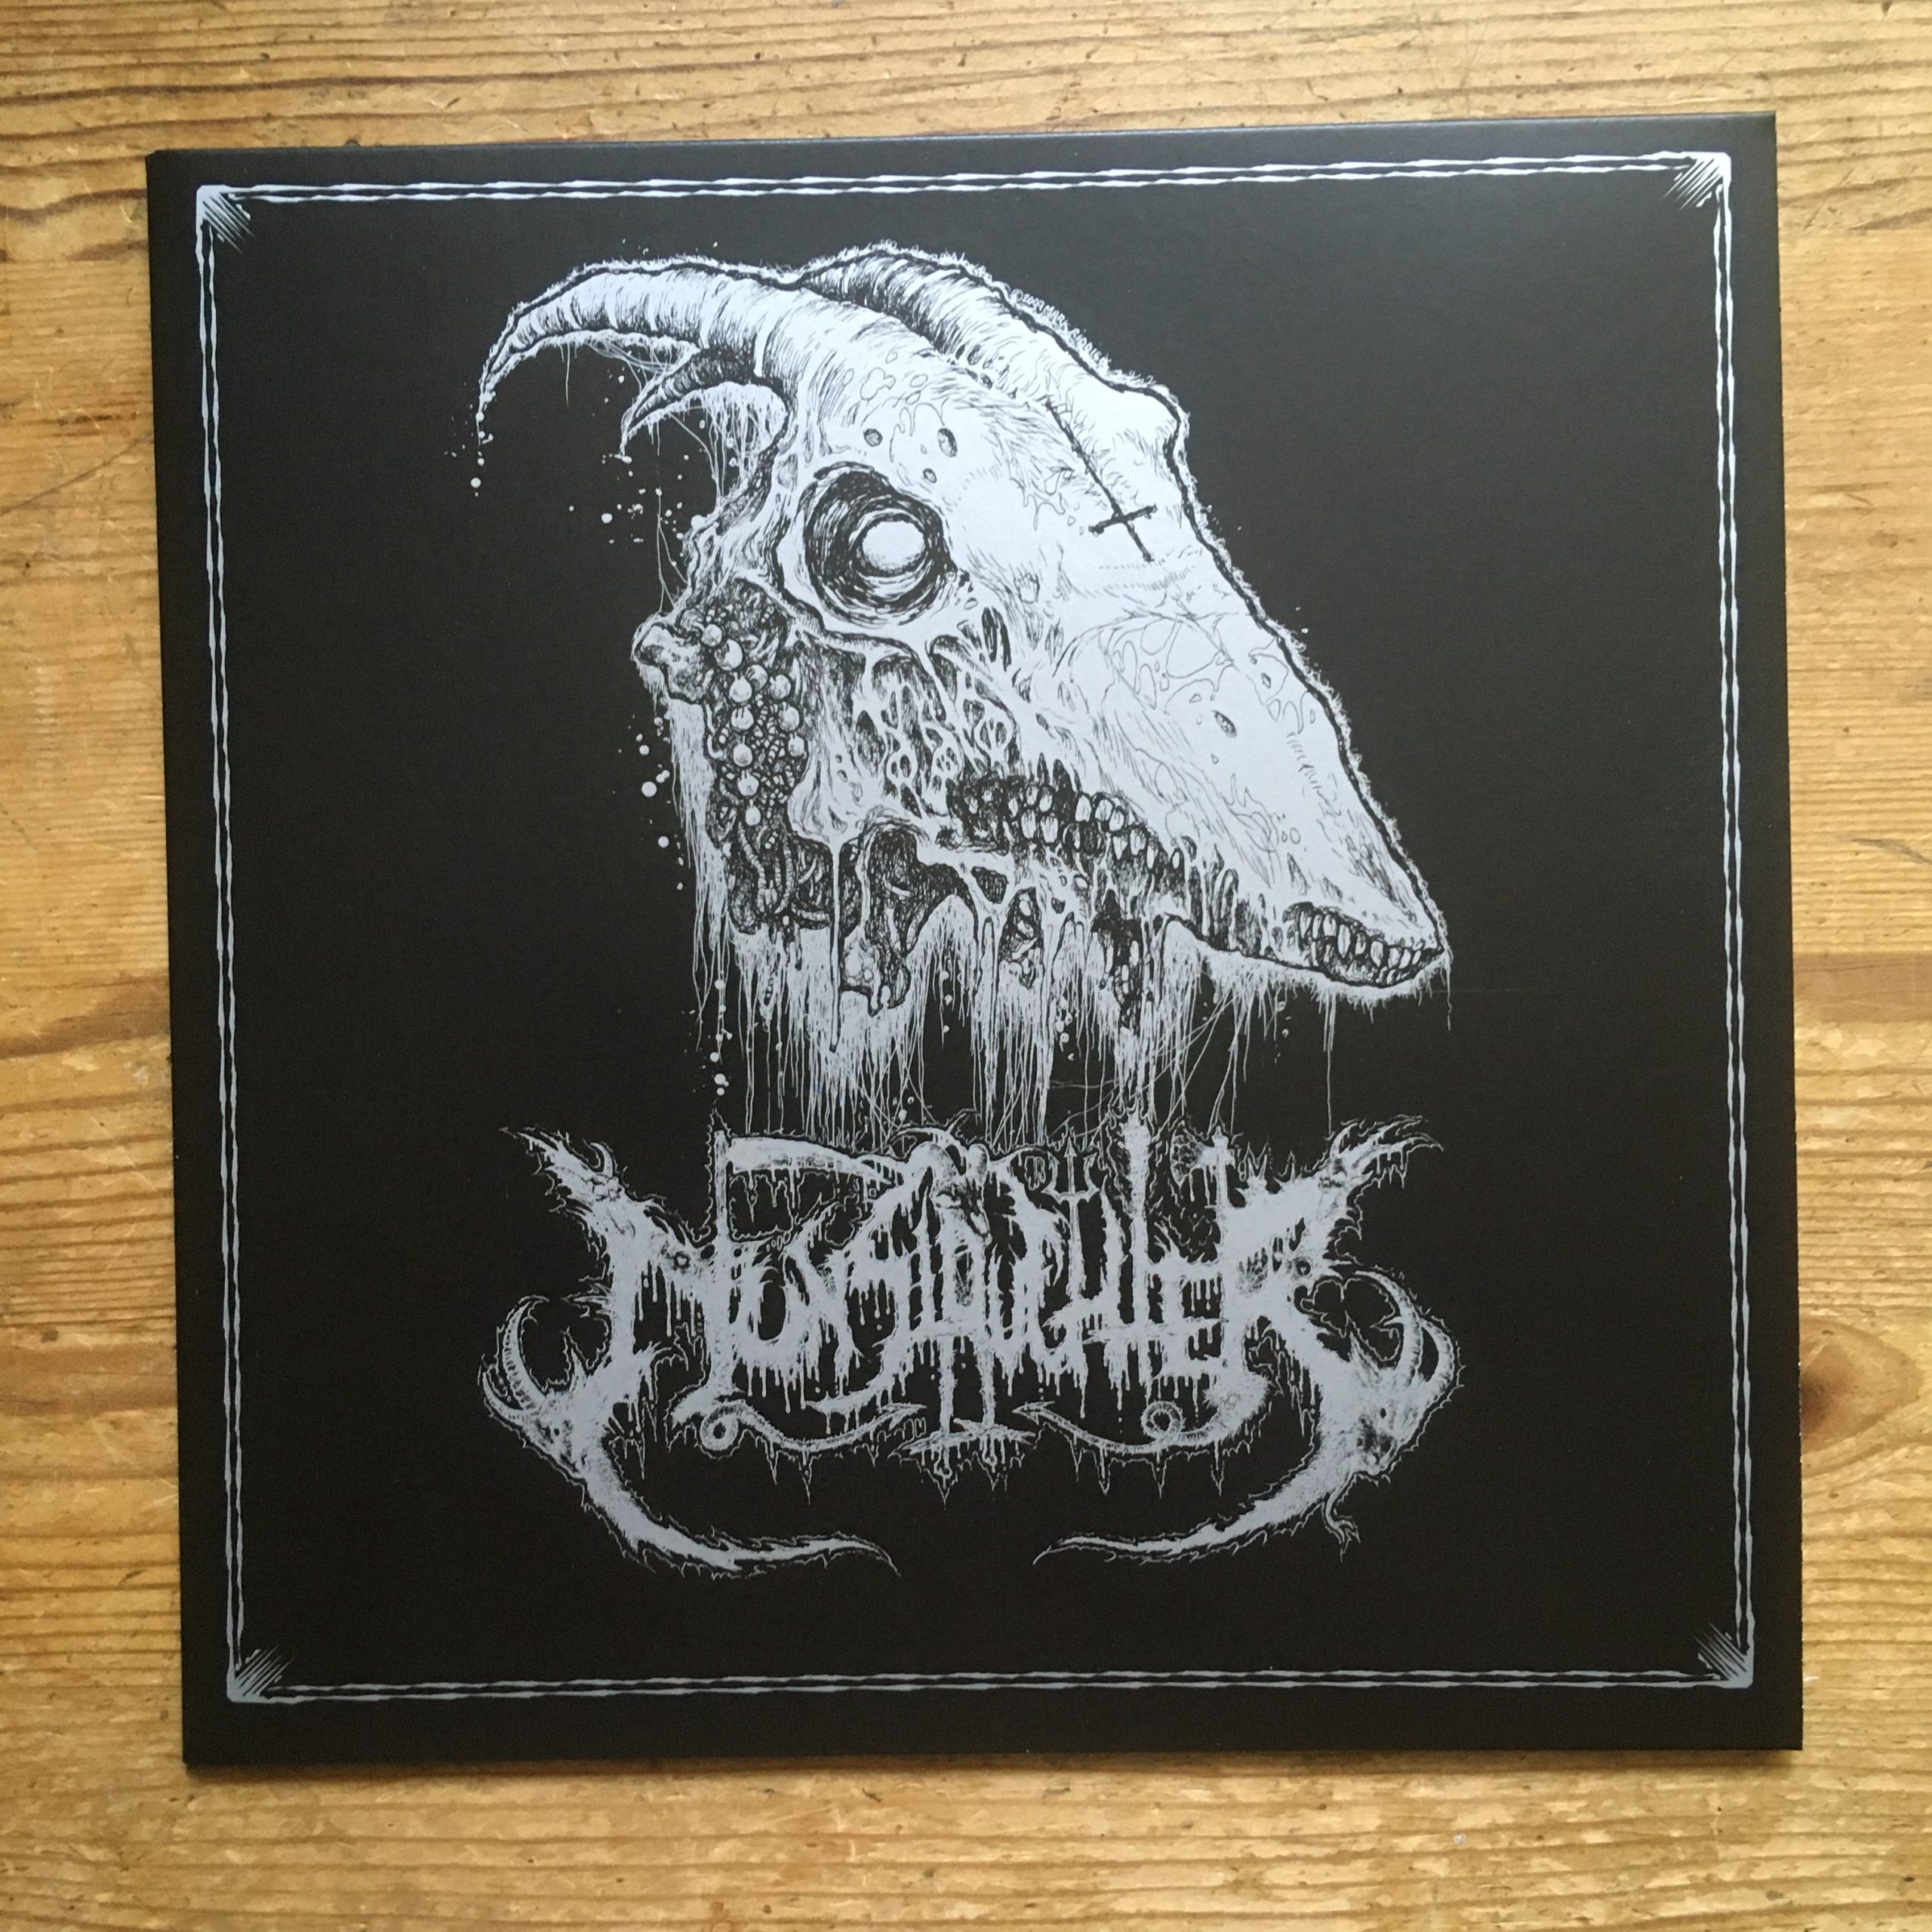 Photo of the Nunslaughter / Agathocles - "Split" 7" EP (Black vinyl)